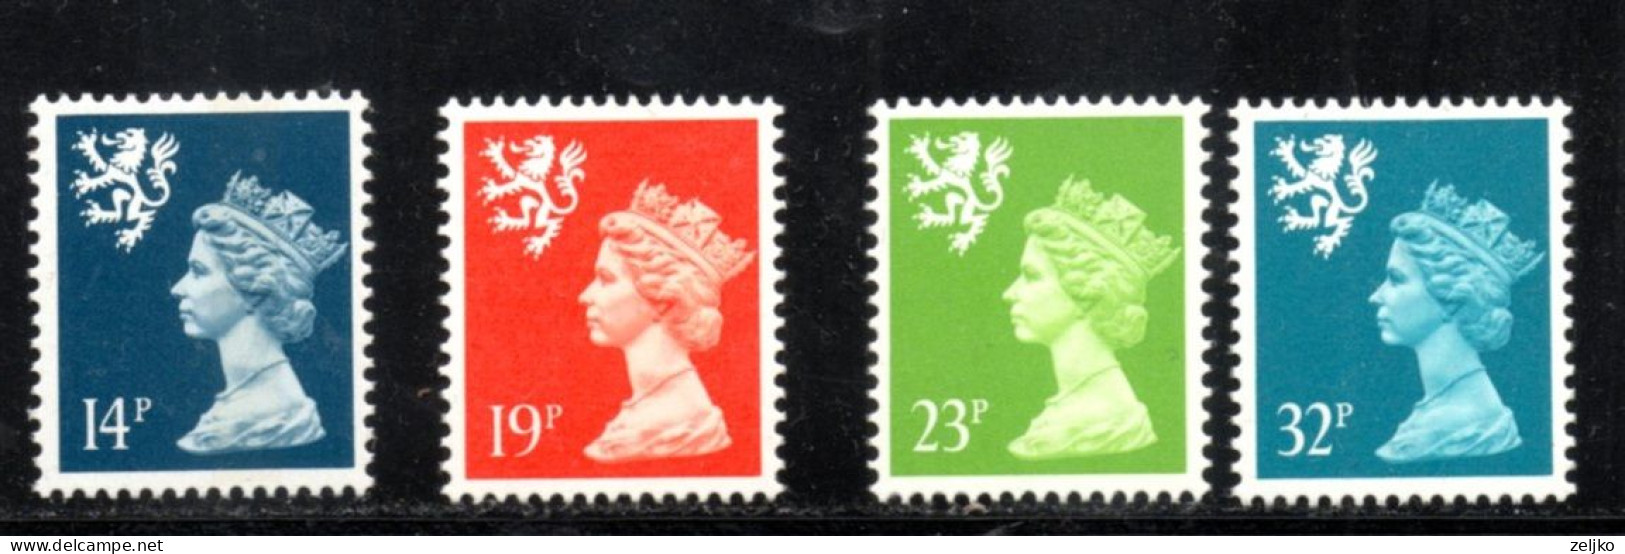 UK, GB, Great Britain, Regional Issue, Scotland, MNH, 1988, Michel 49 - 52, Queen Elizabeth - Scozia